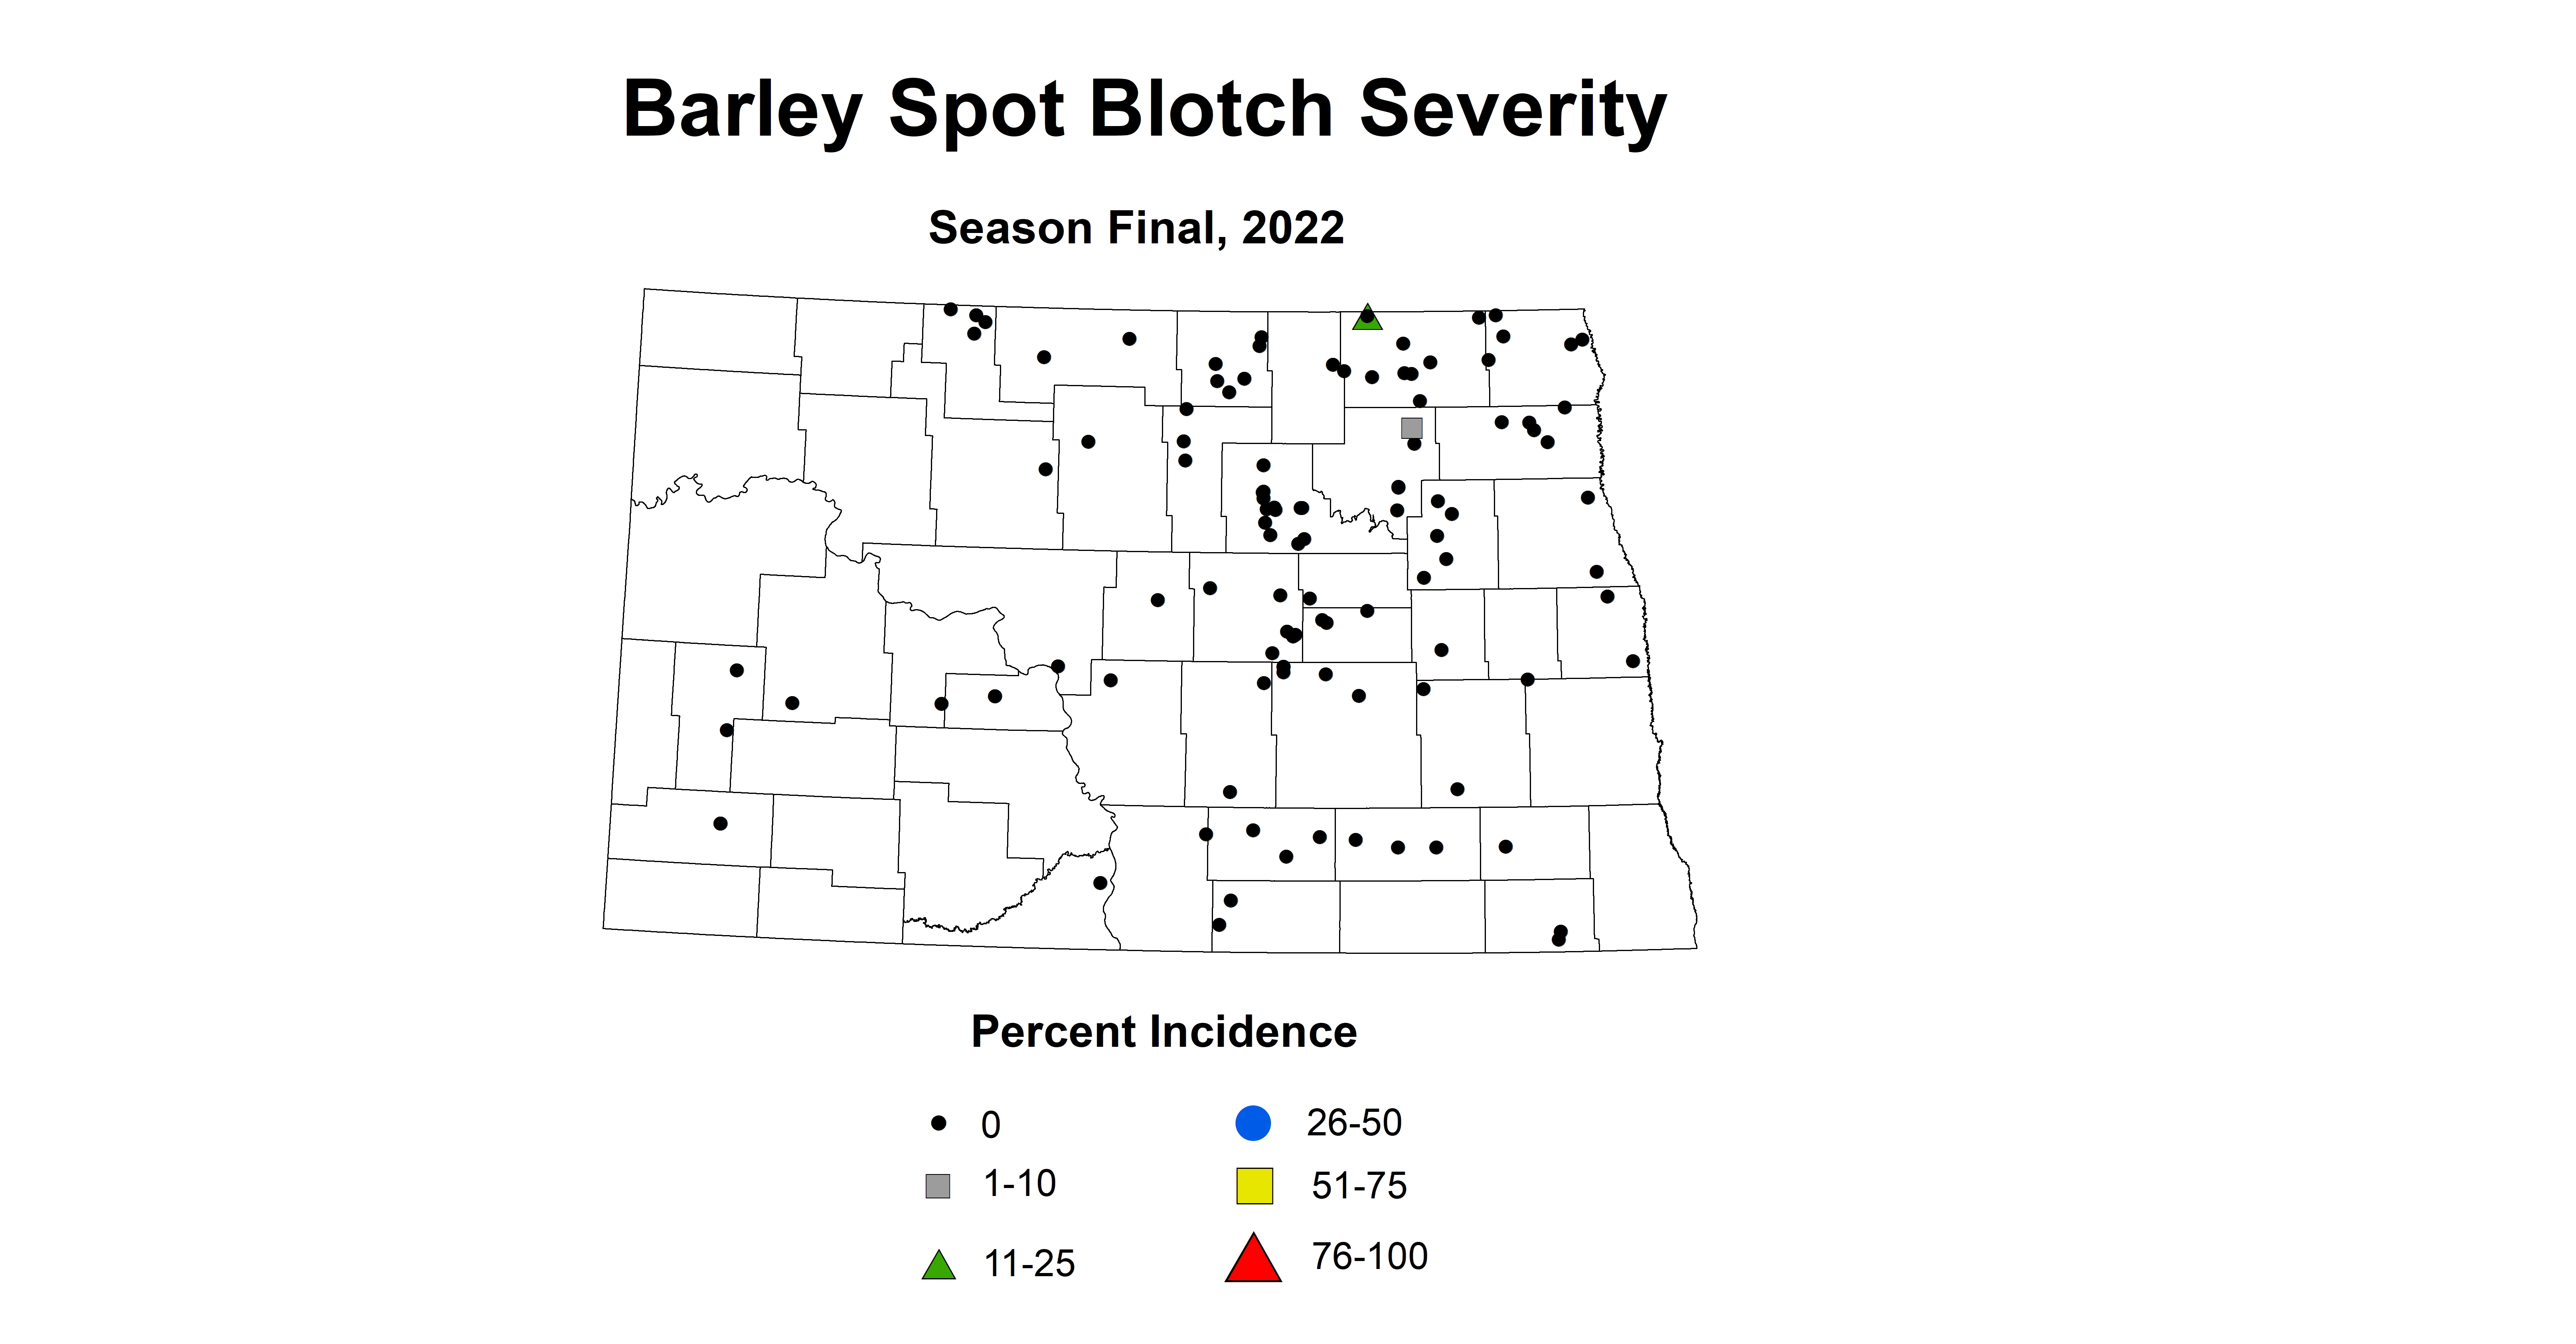 barley spot blotch severity 2022 season final